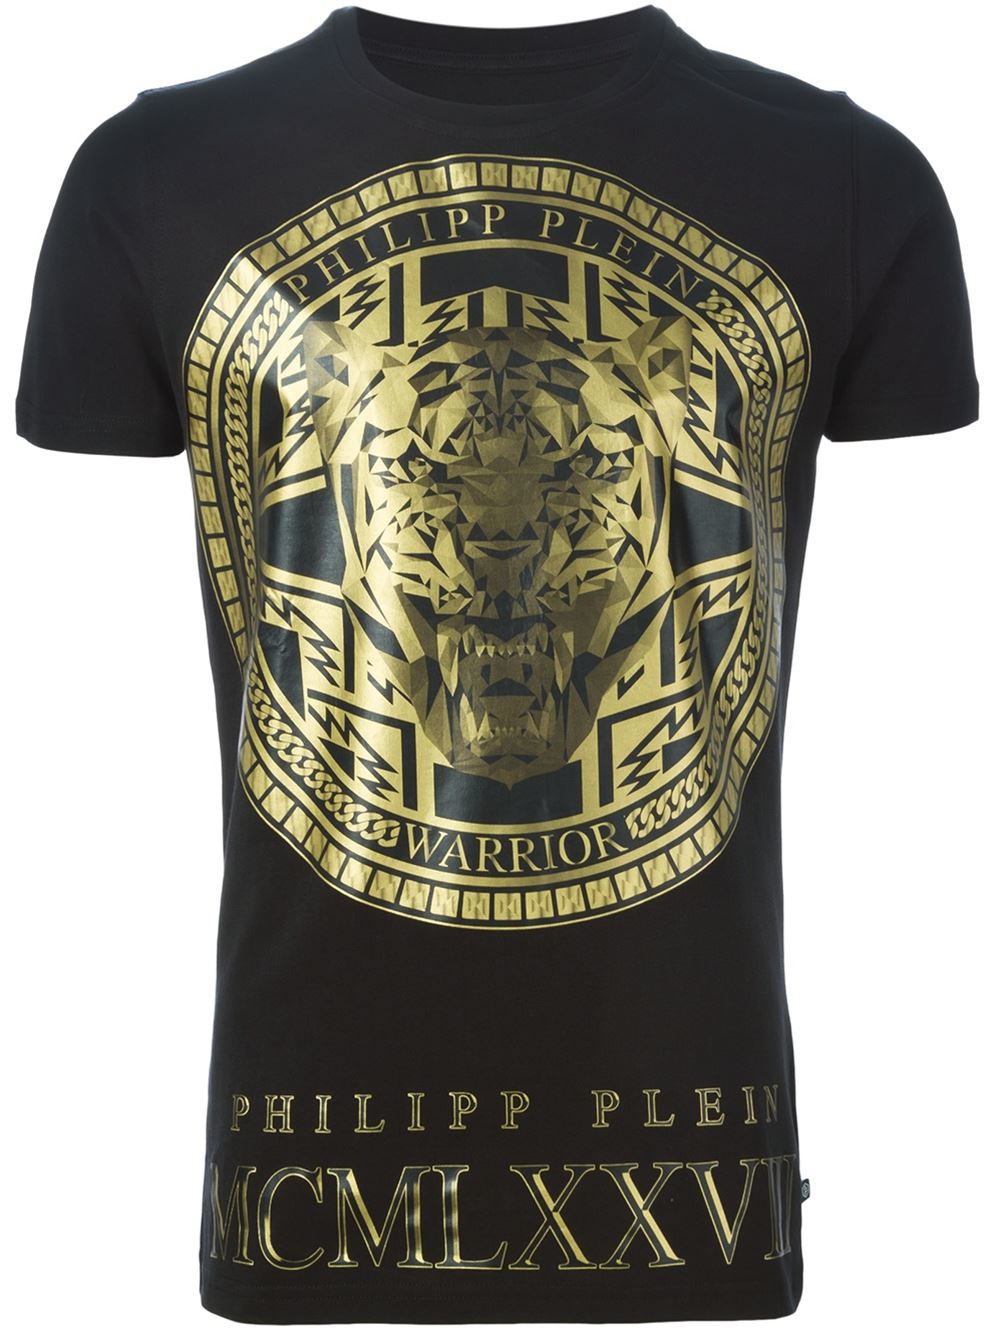 Philipp plein 'medallion' T-shirt in Metallic for Men | Lyst